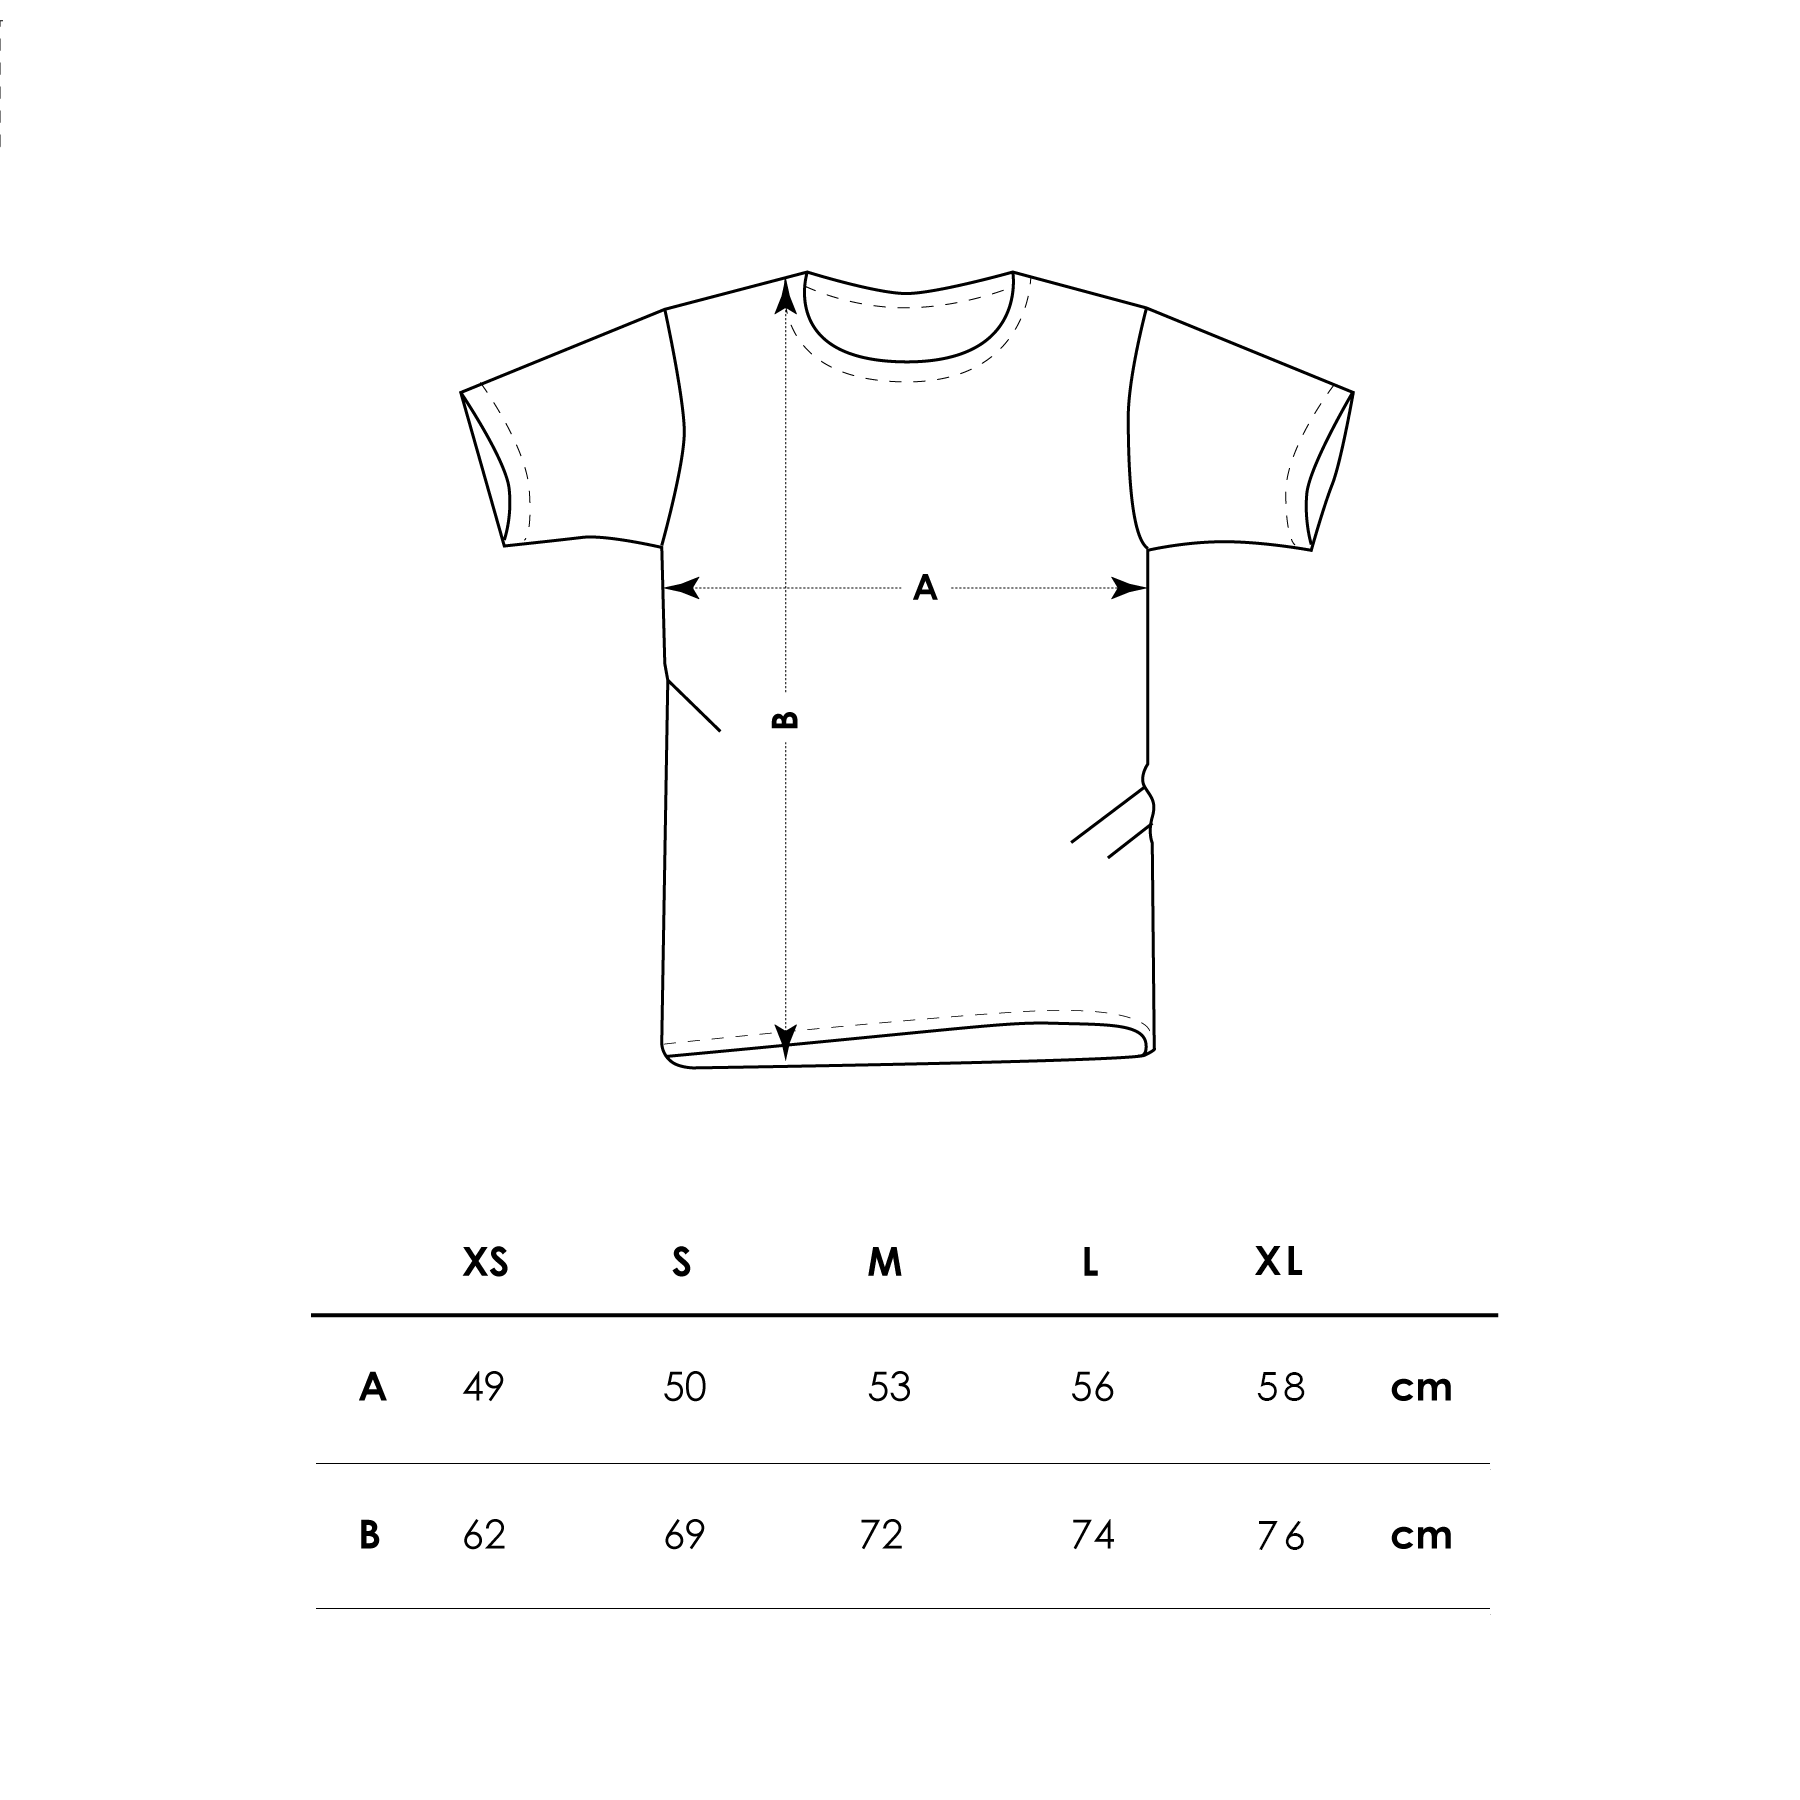 SCEMO CHI LEGGE / T-shirt + cartolina